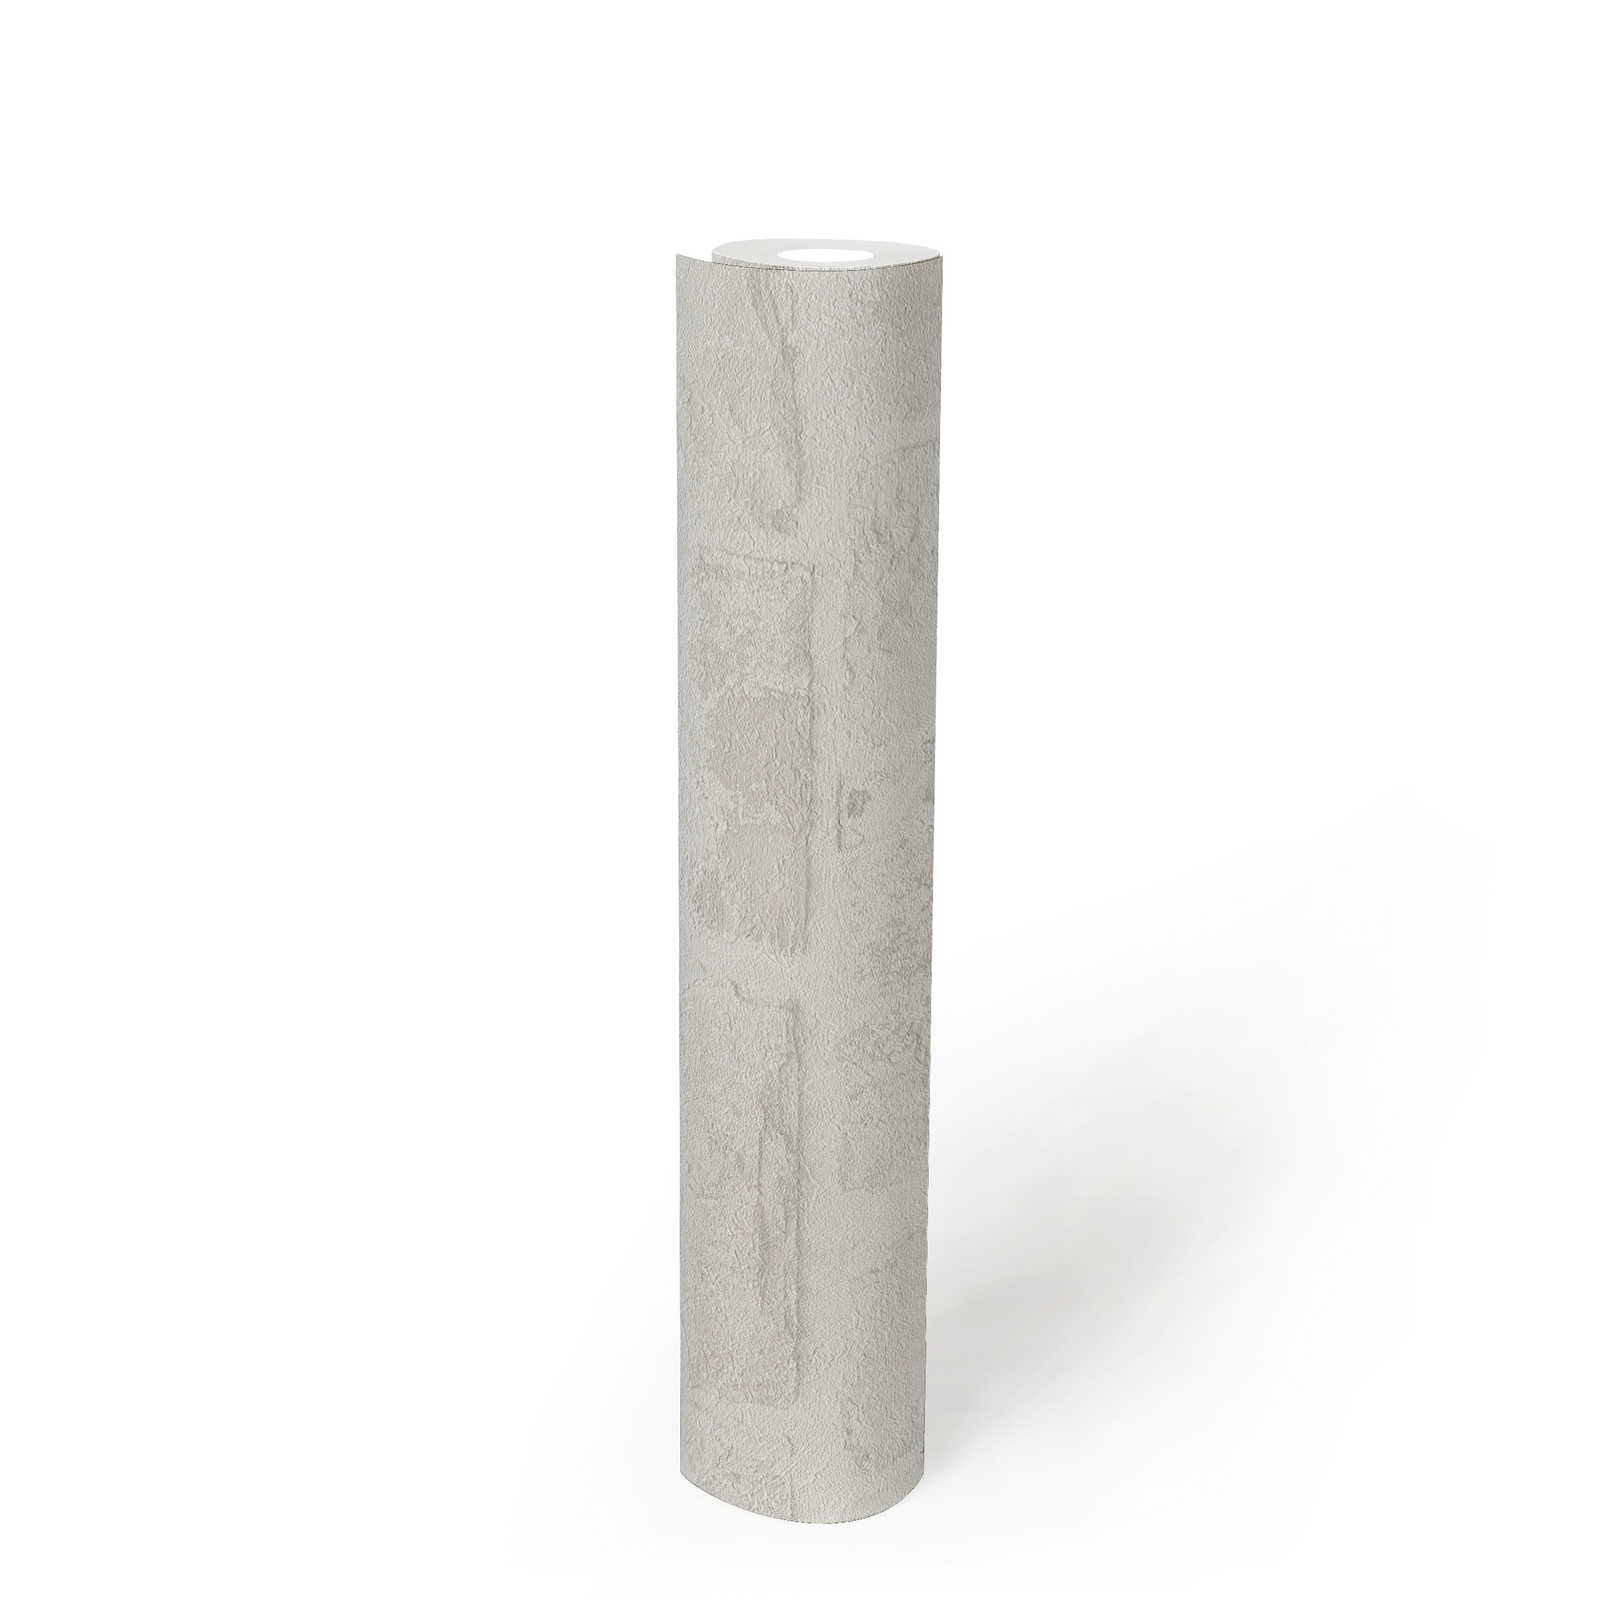             PVC-freie Steinoptik Vliestapete – Weiß, Grau
        